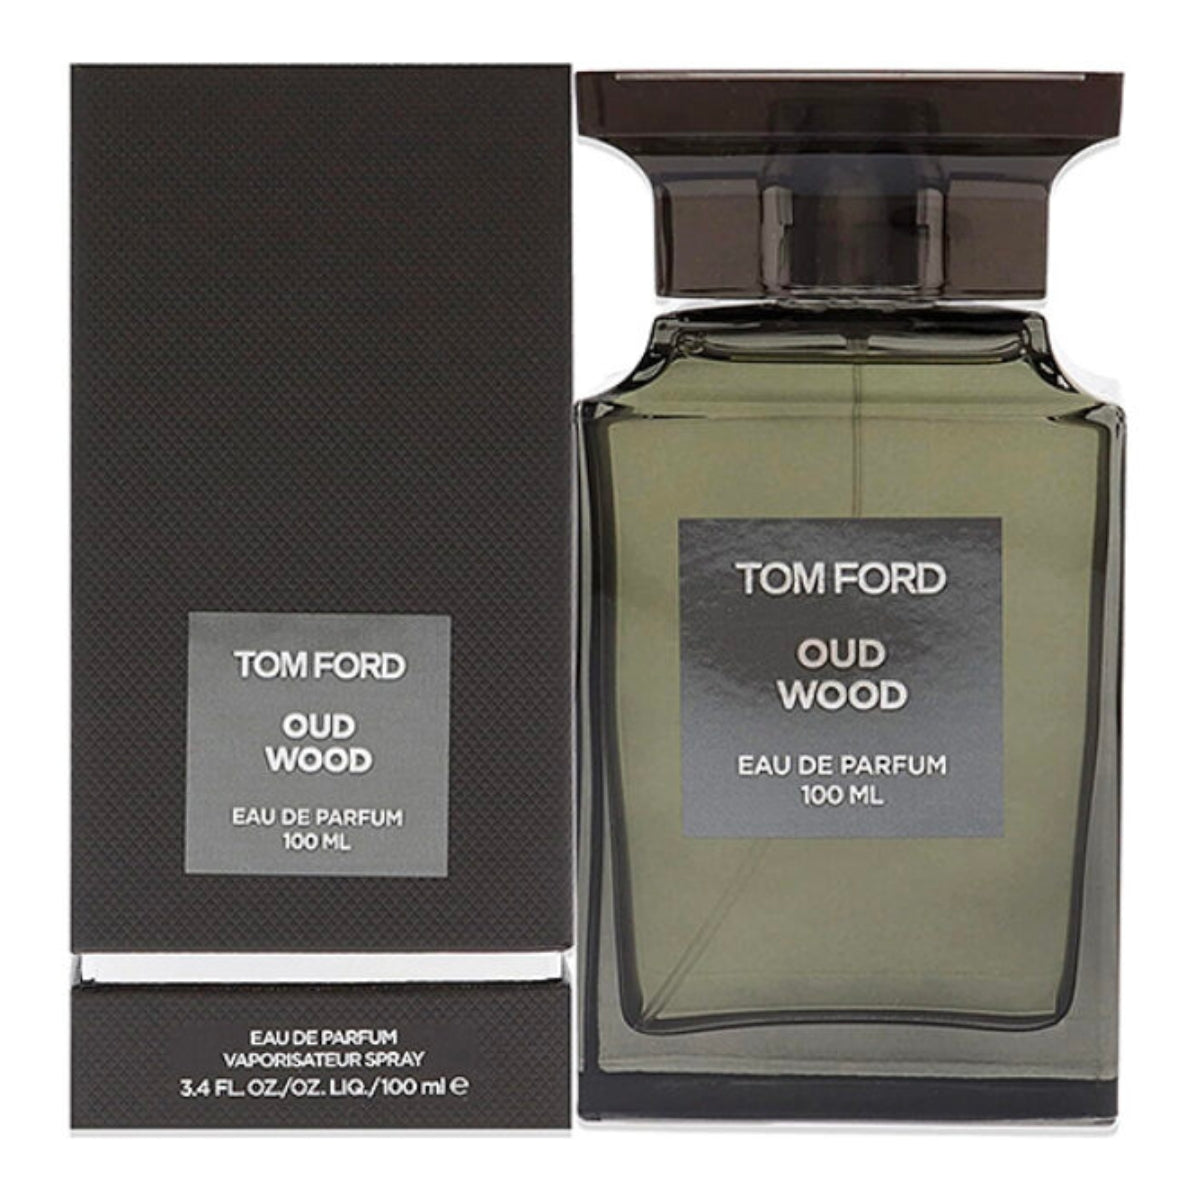 Tom Ford Oud Wood Eau de Parfum - UrPerfume